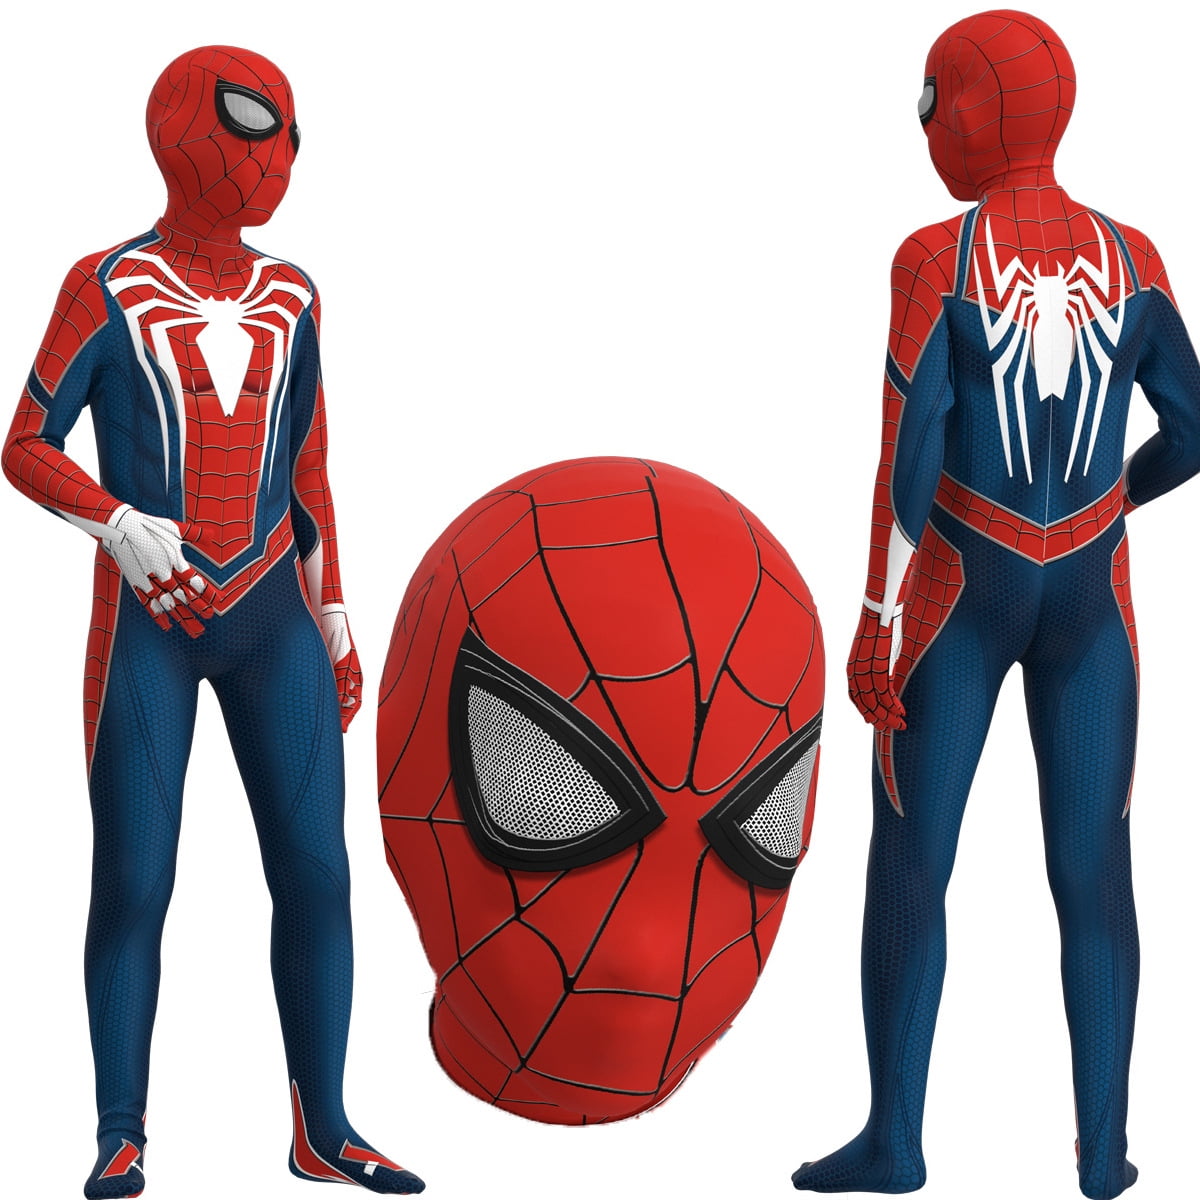 Superhero bodysuits for kids kids superhero holiday costumes and Halloween cosplay costumes 